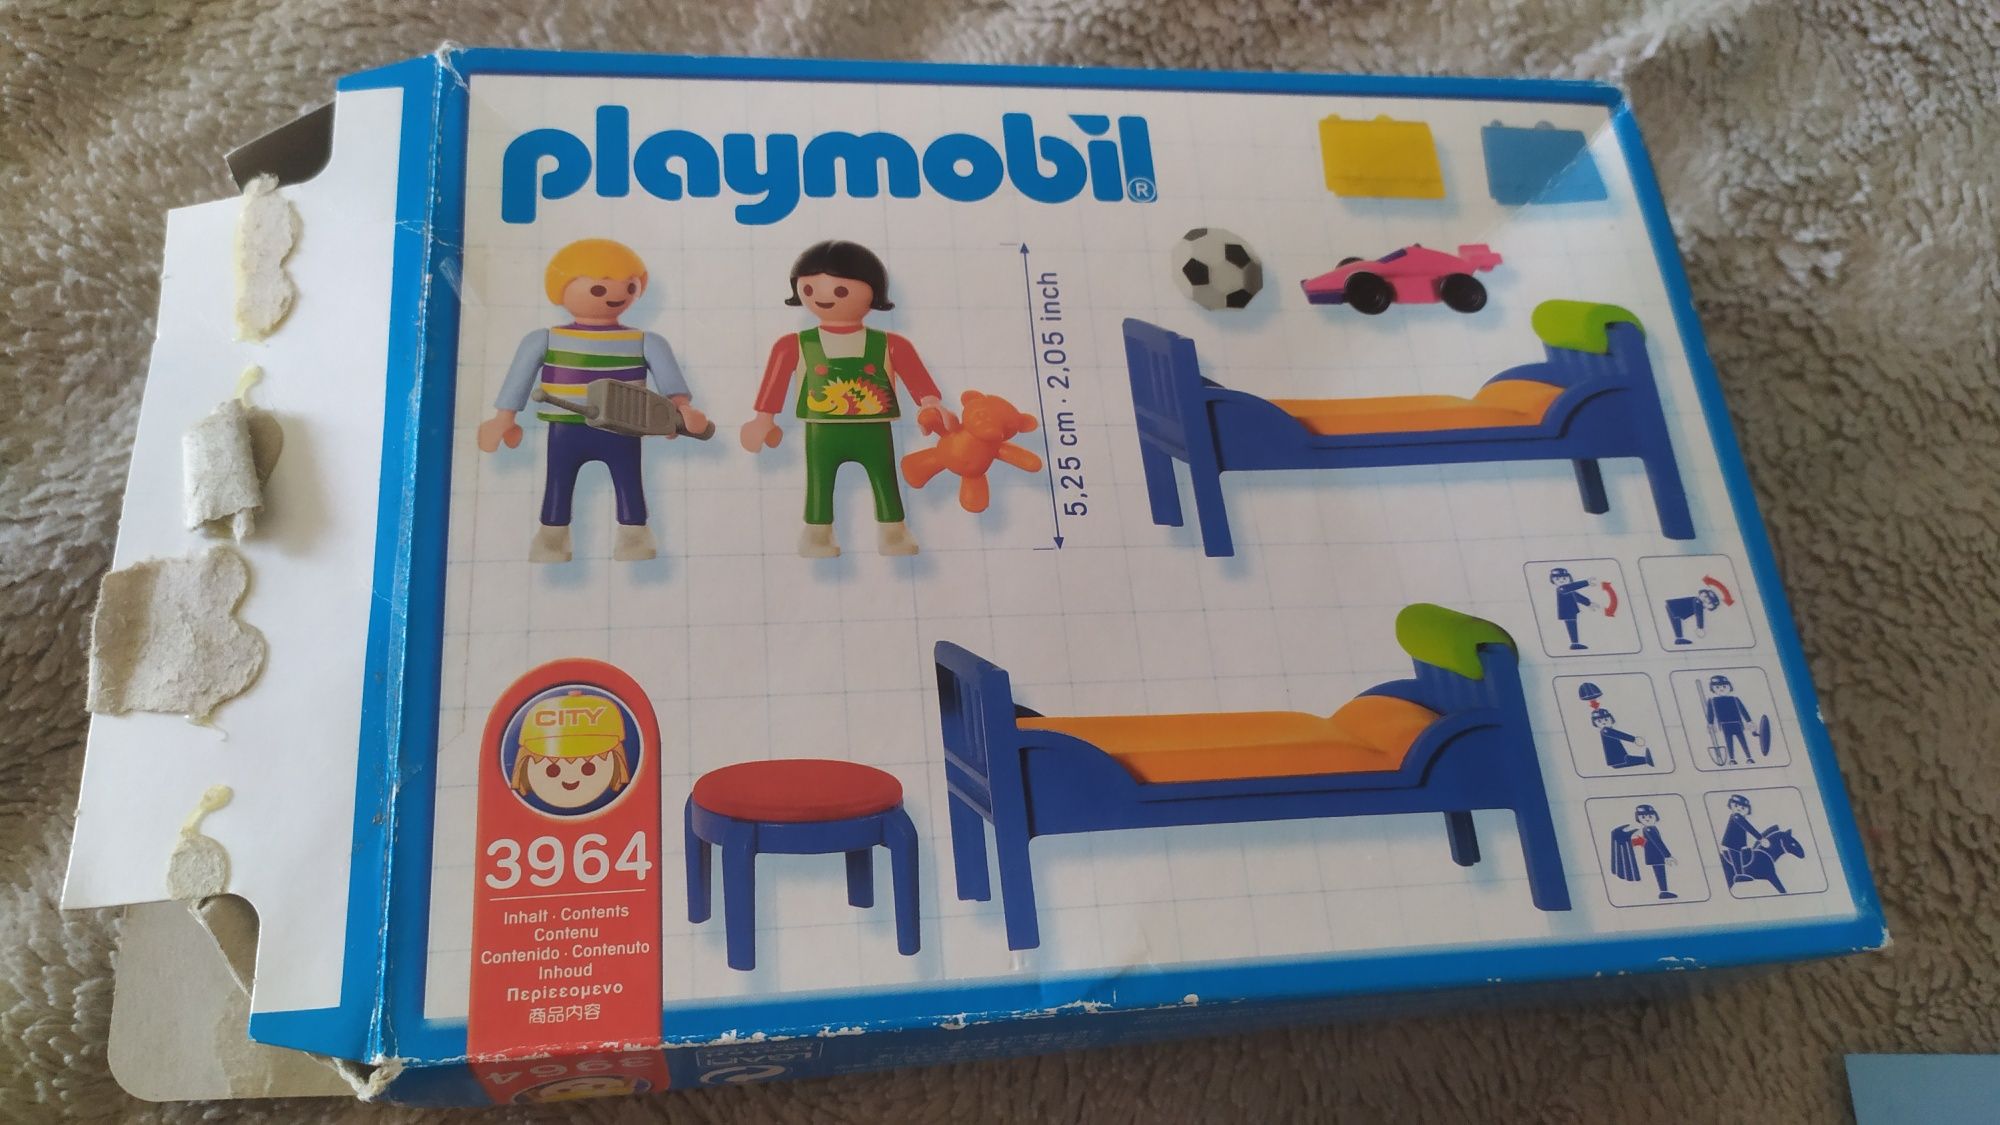 Playmobil set 3964